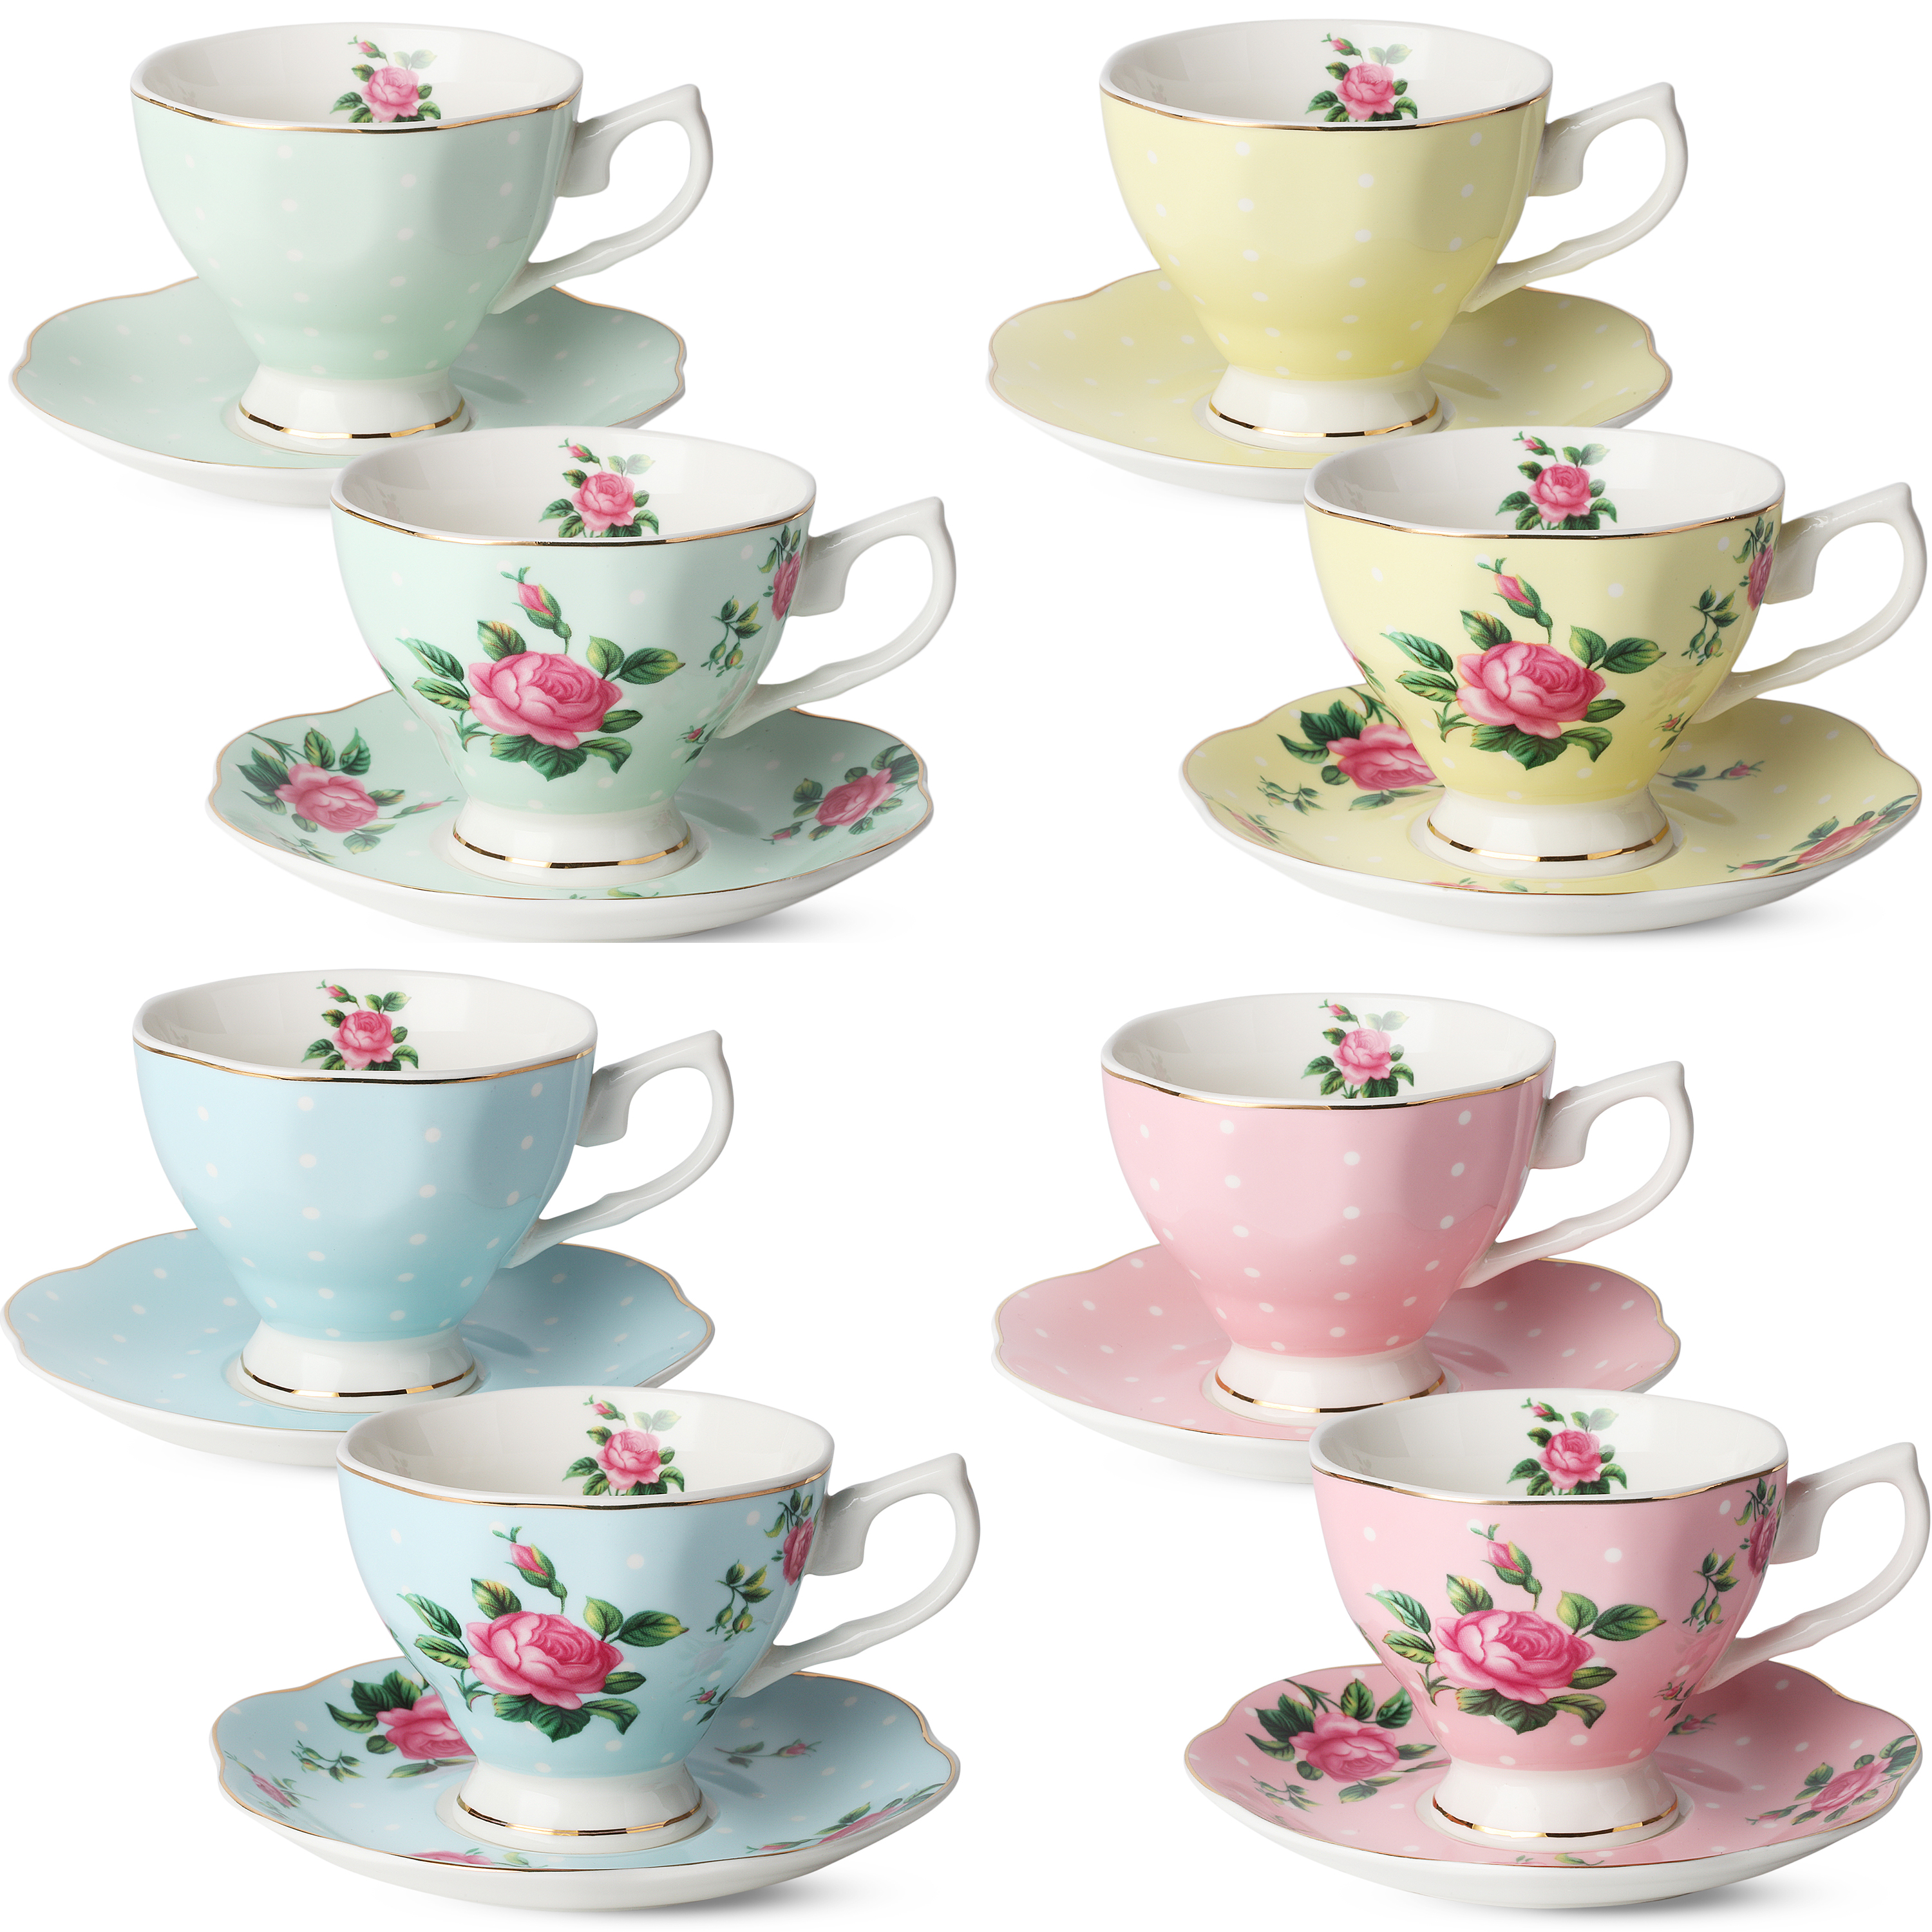 BTäT- Multicolor Floral Tea Cups and Saucers (set of 8) – BTAT